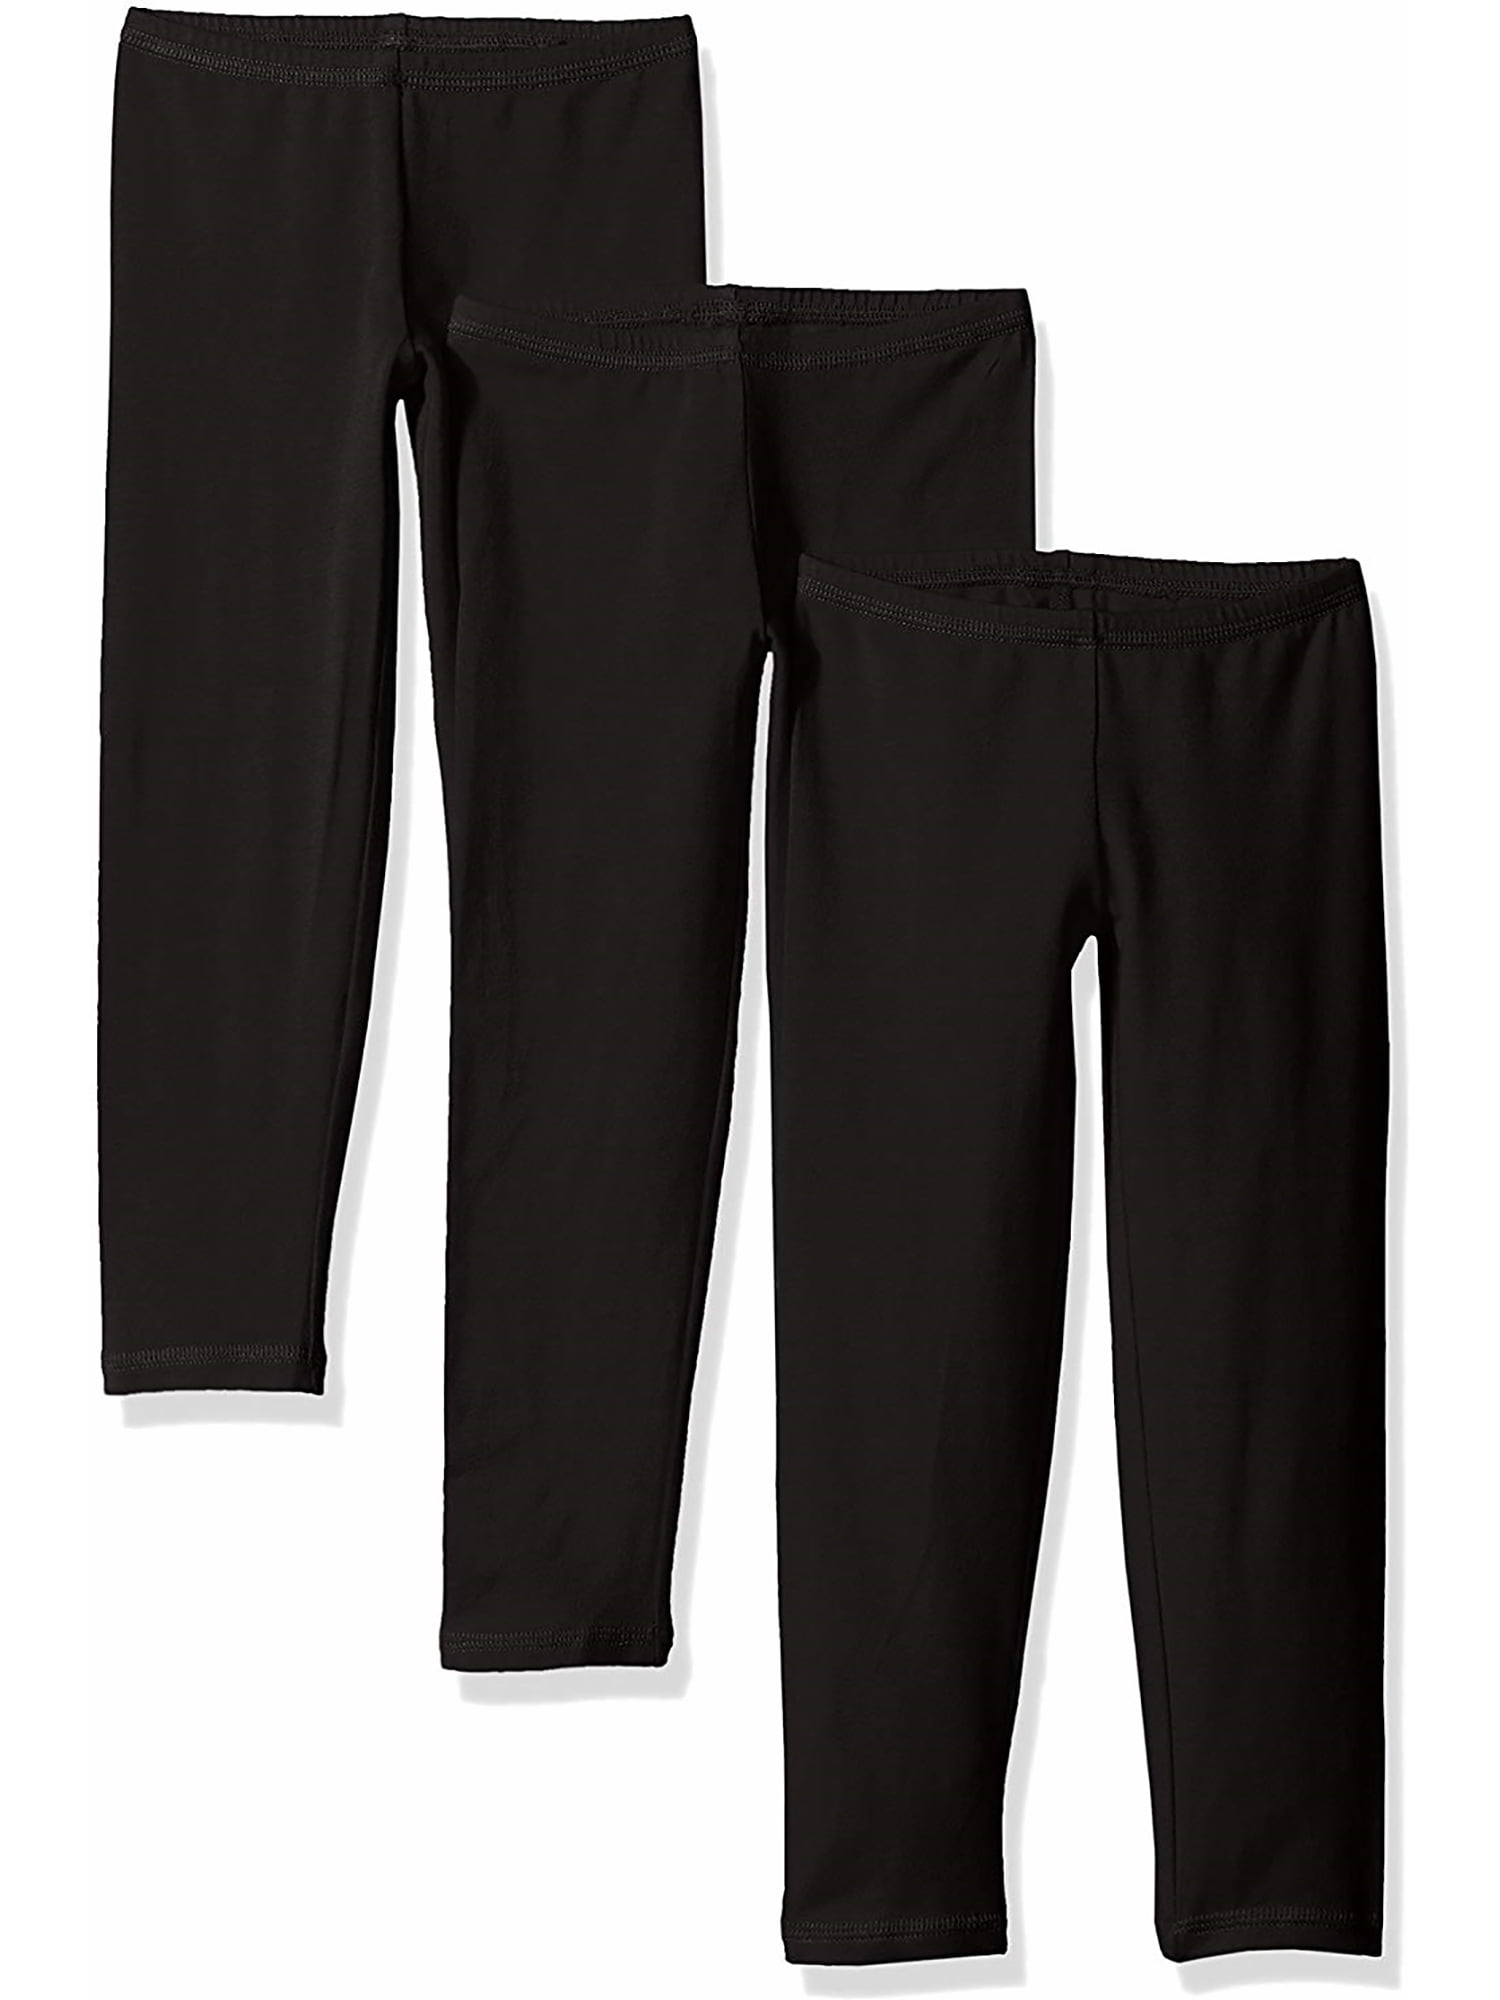 Hanes Girls Cotton Leggings, 3-Pack, Sizes 4-16 - Walmart.com